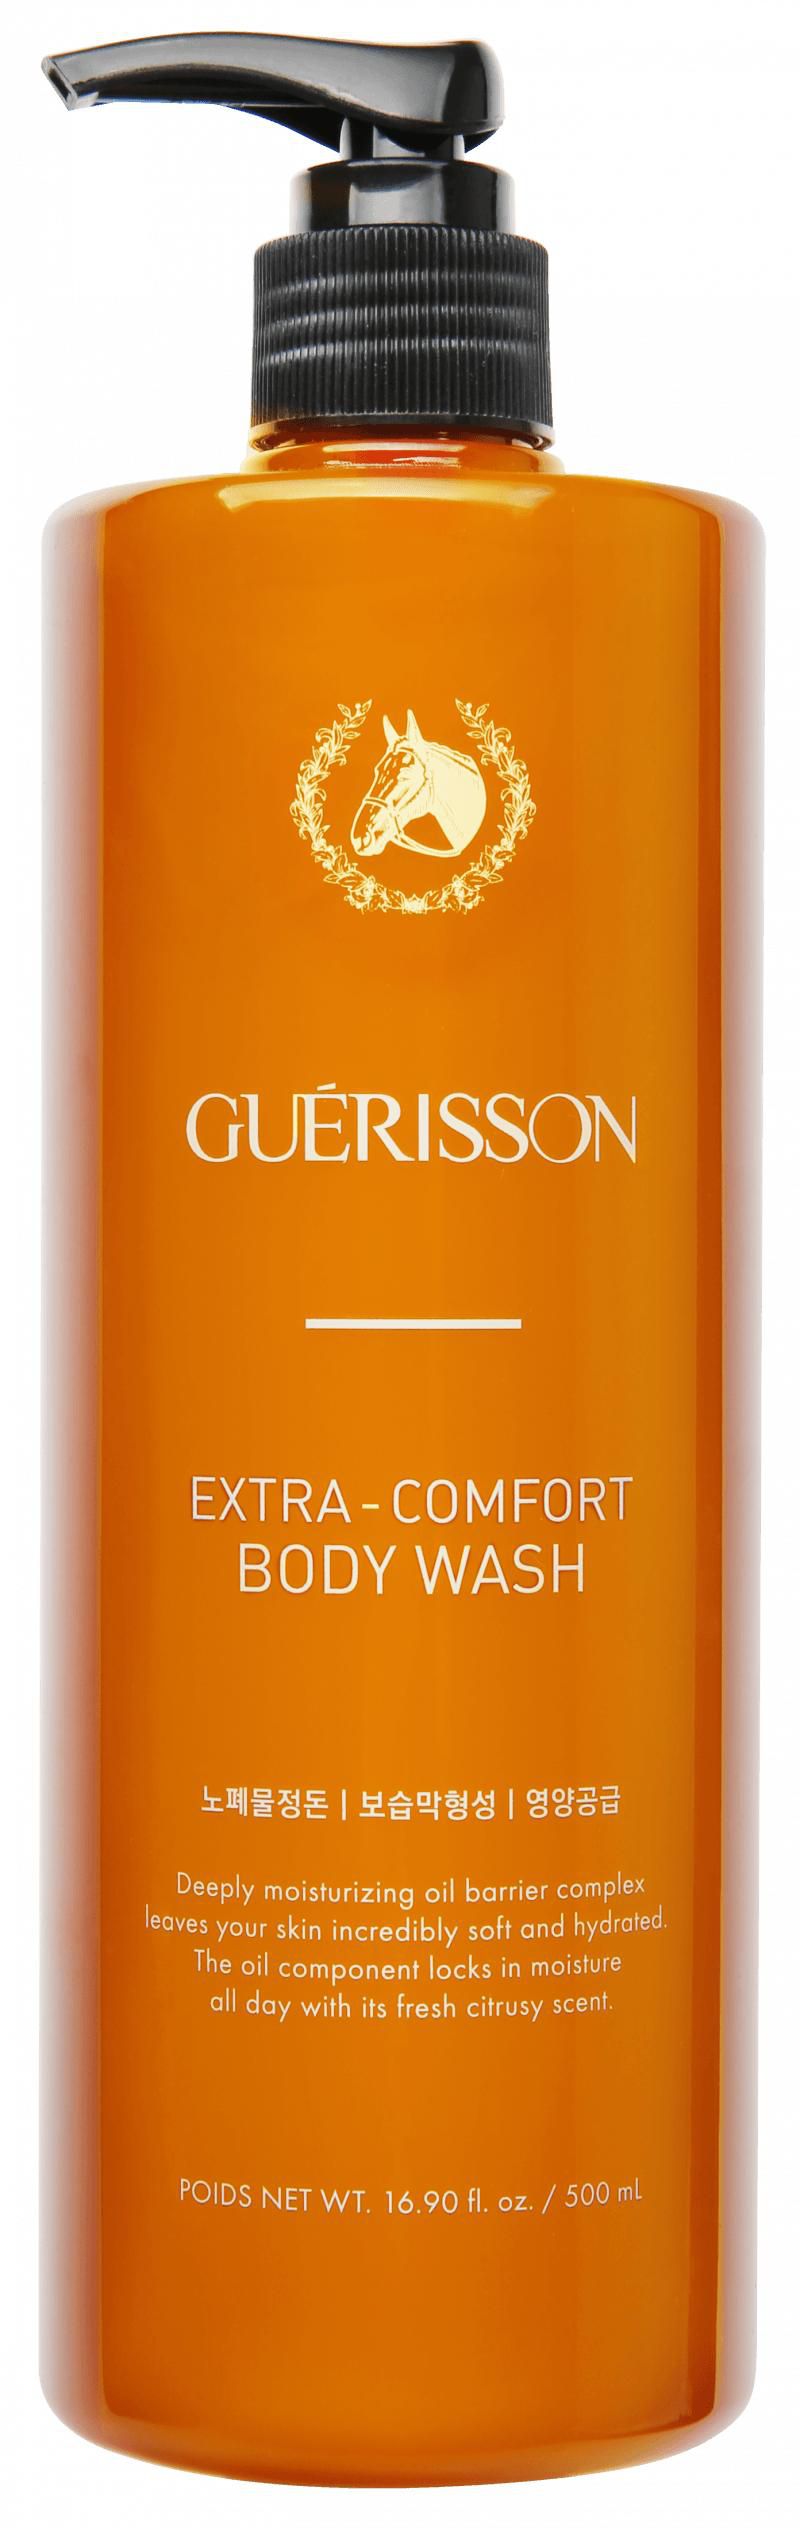 Guerisson Extra-Comfort Body Wash 500ml